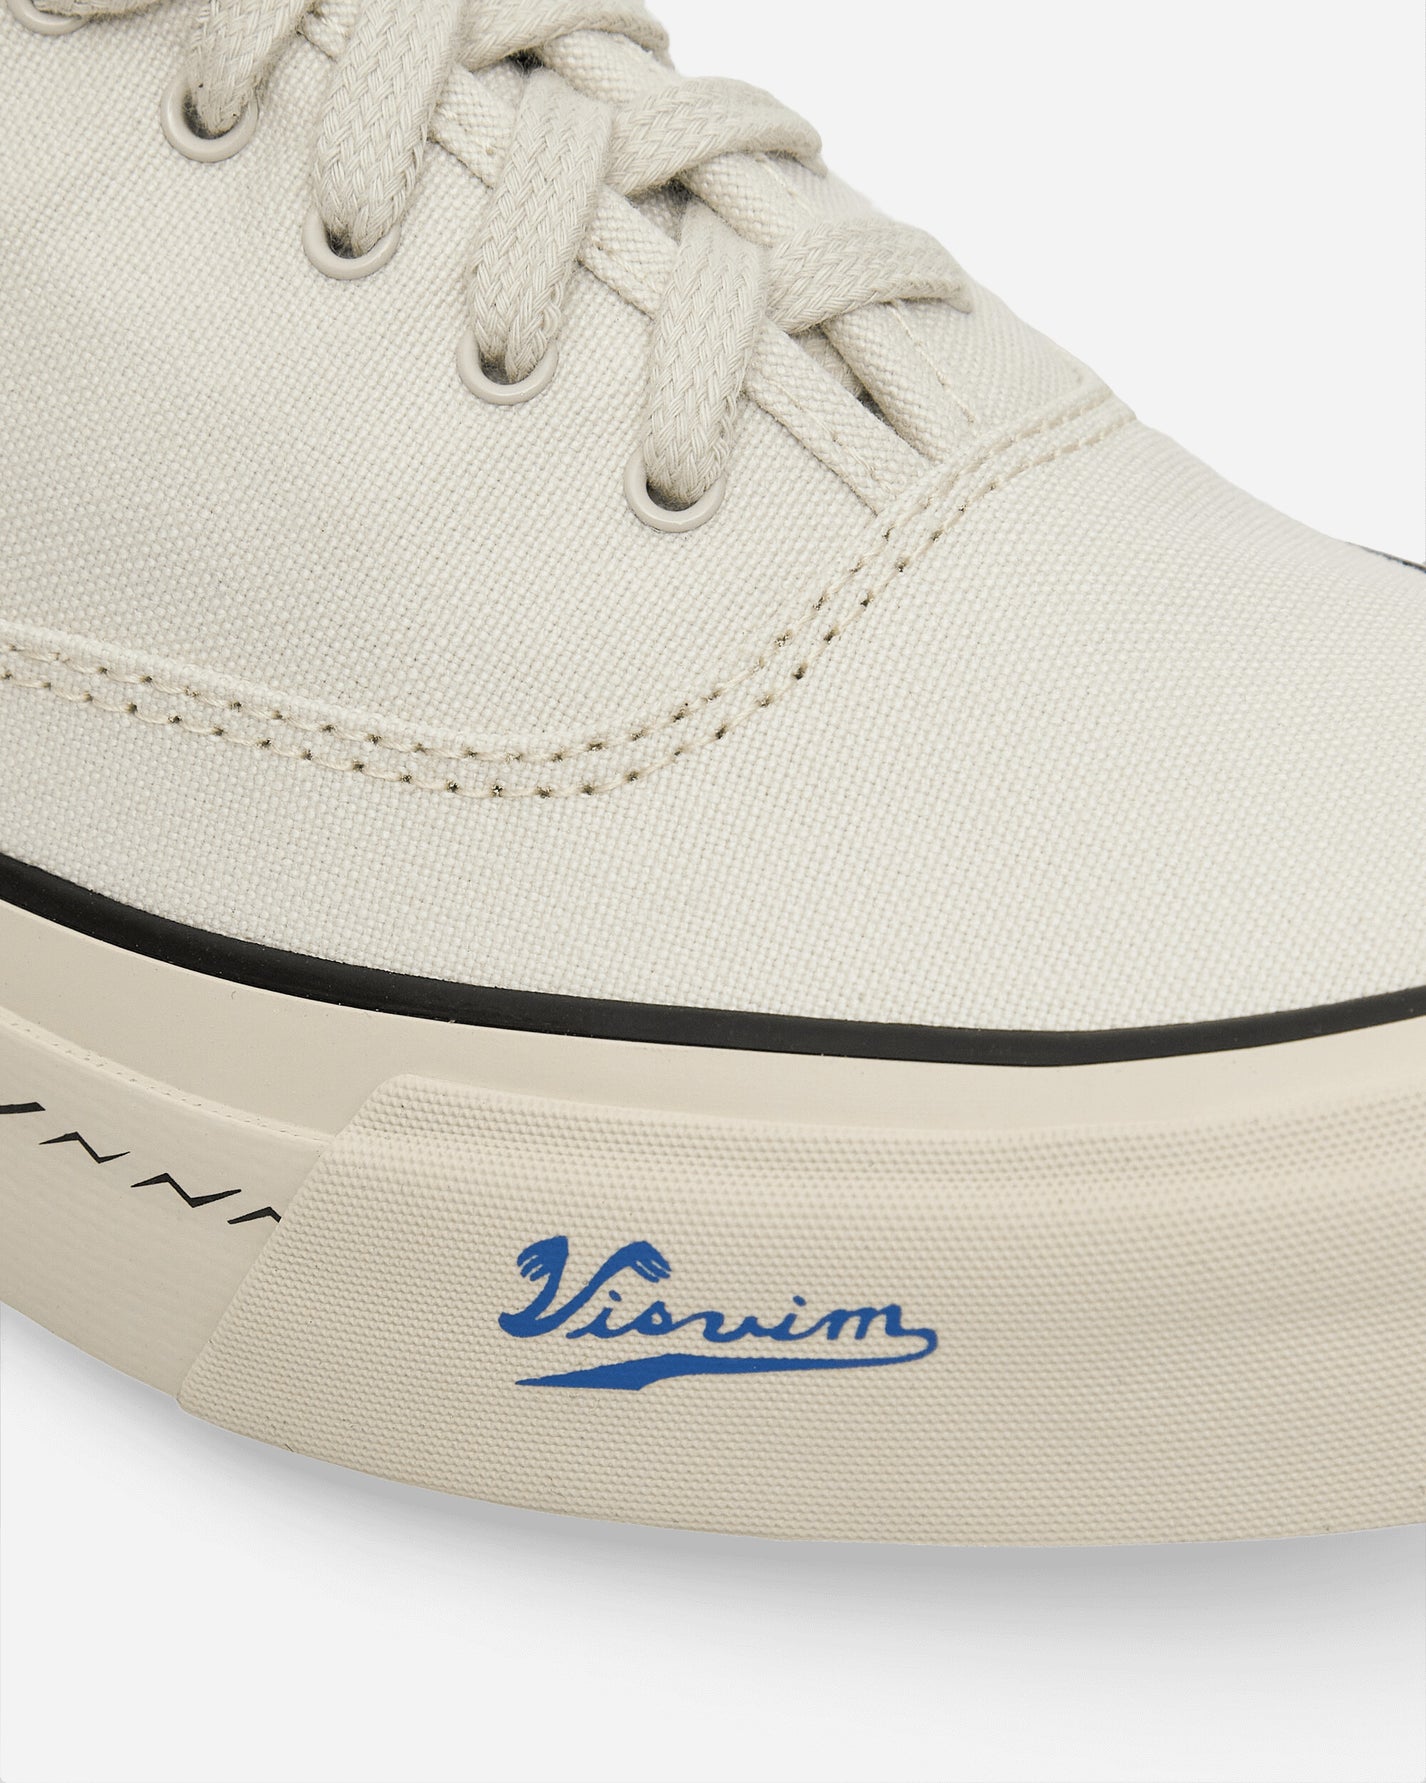 visvim Logan Deck Lo Sipe White Sneakers Slip-On 124101001004 001